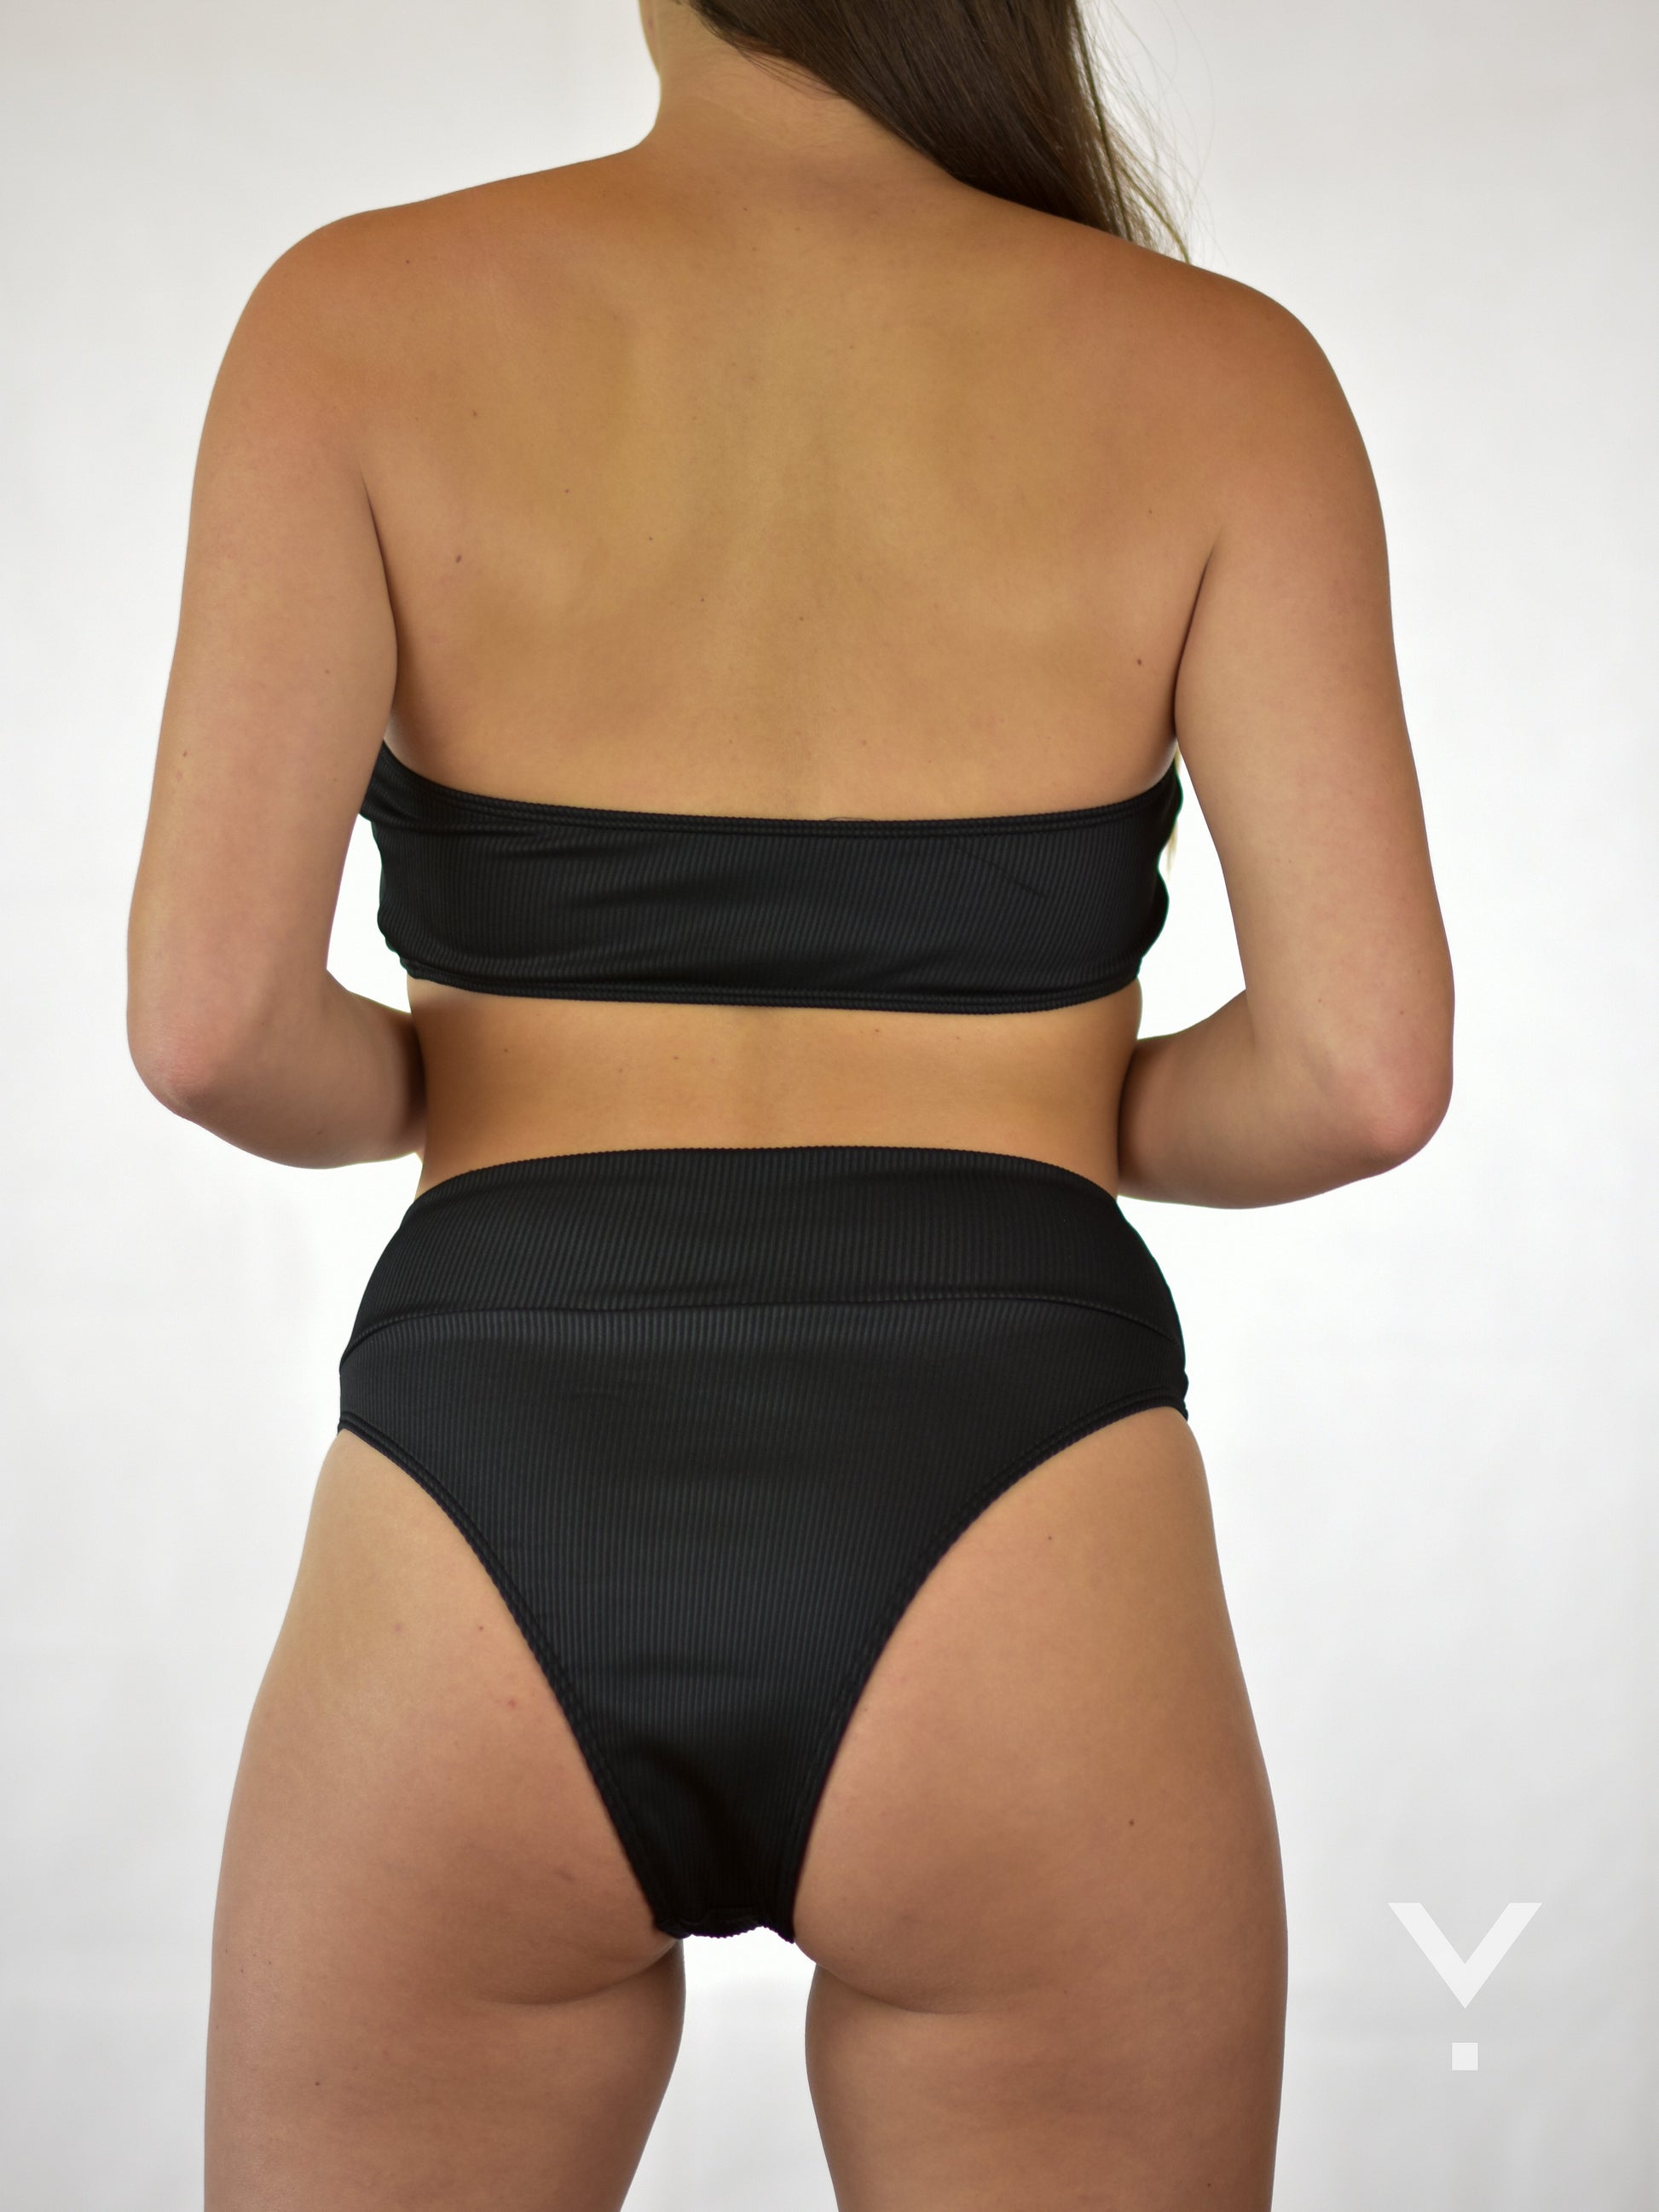 Wipeout Bikini Bottoms Black - Bikini bottom | AVAYOS